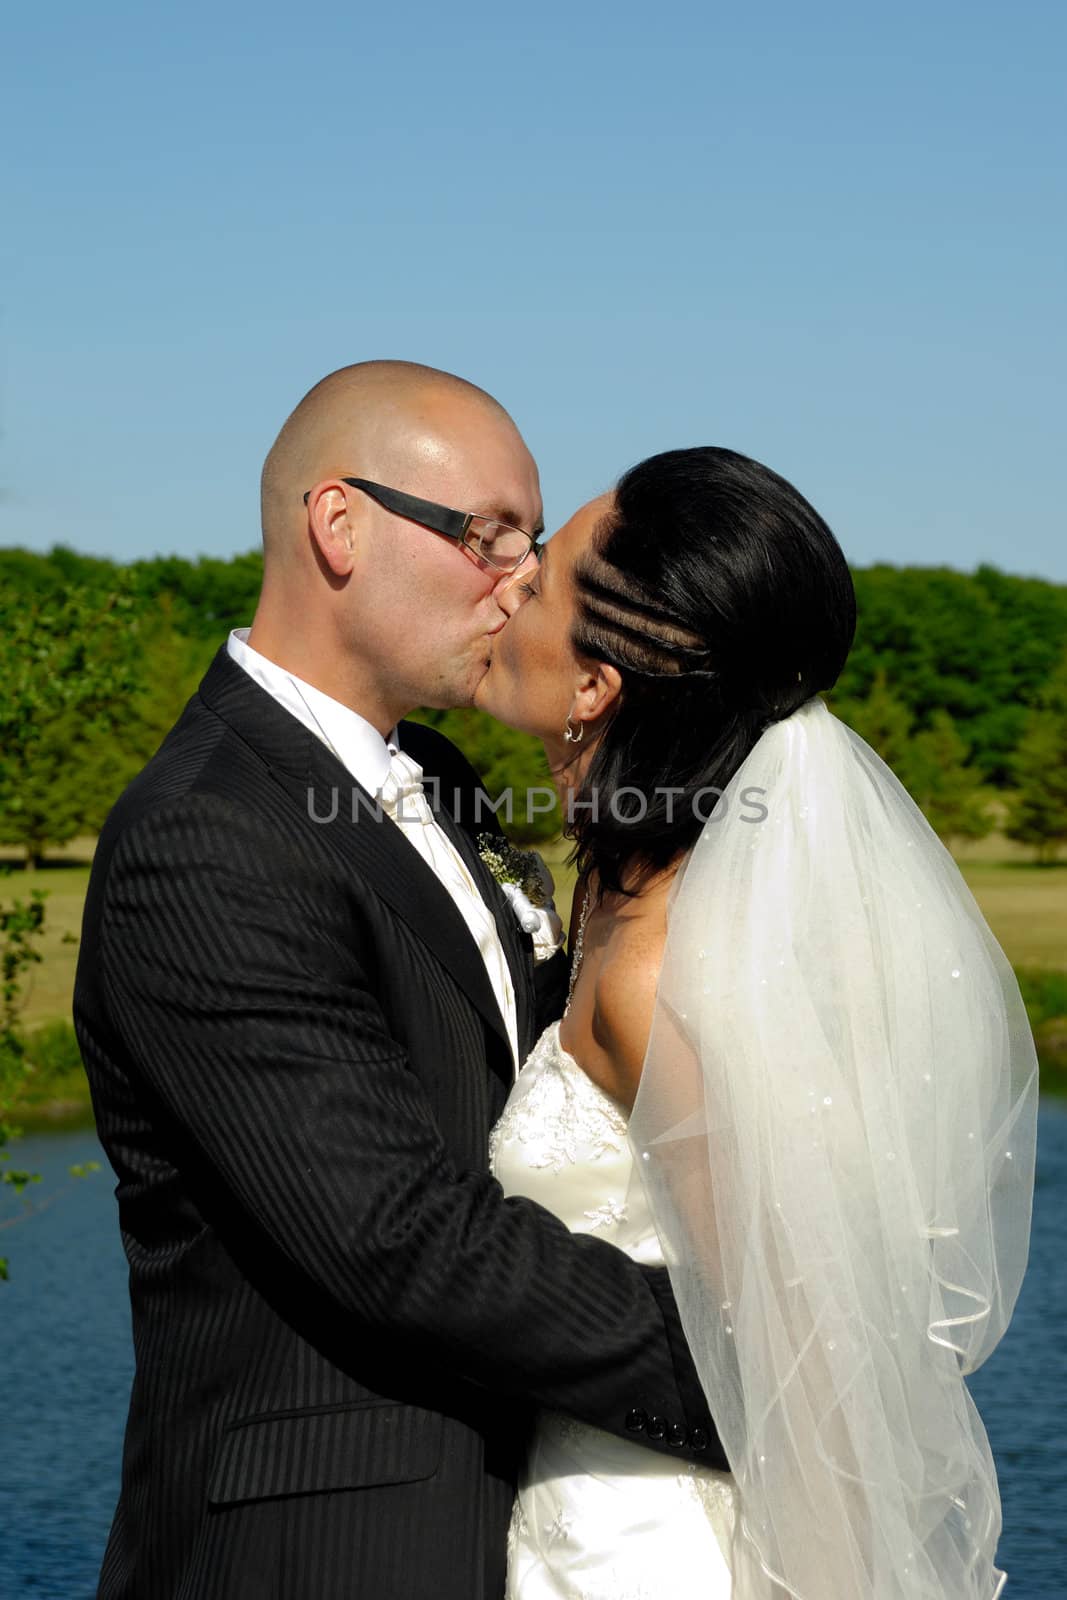 Wedding kiss by cfoto